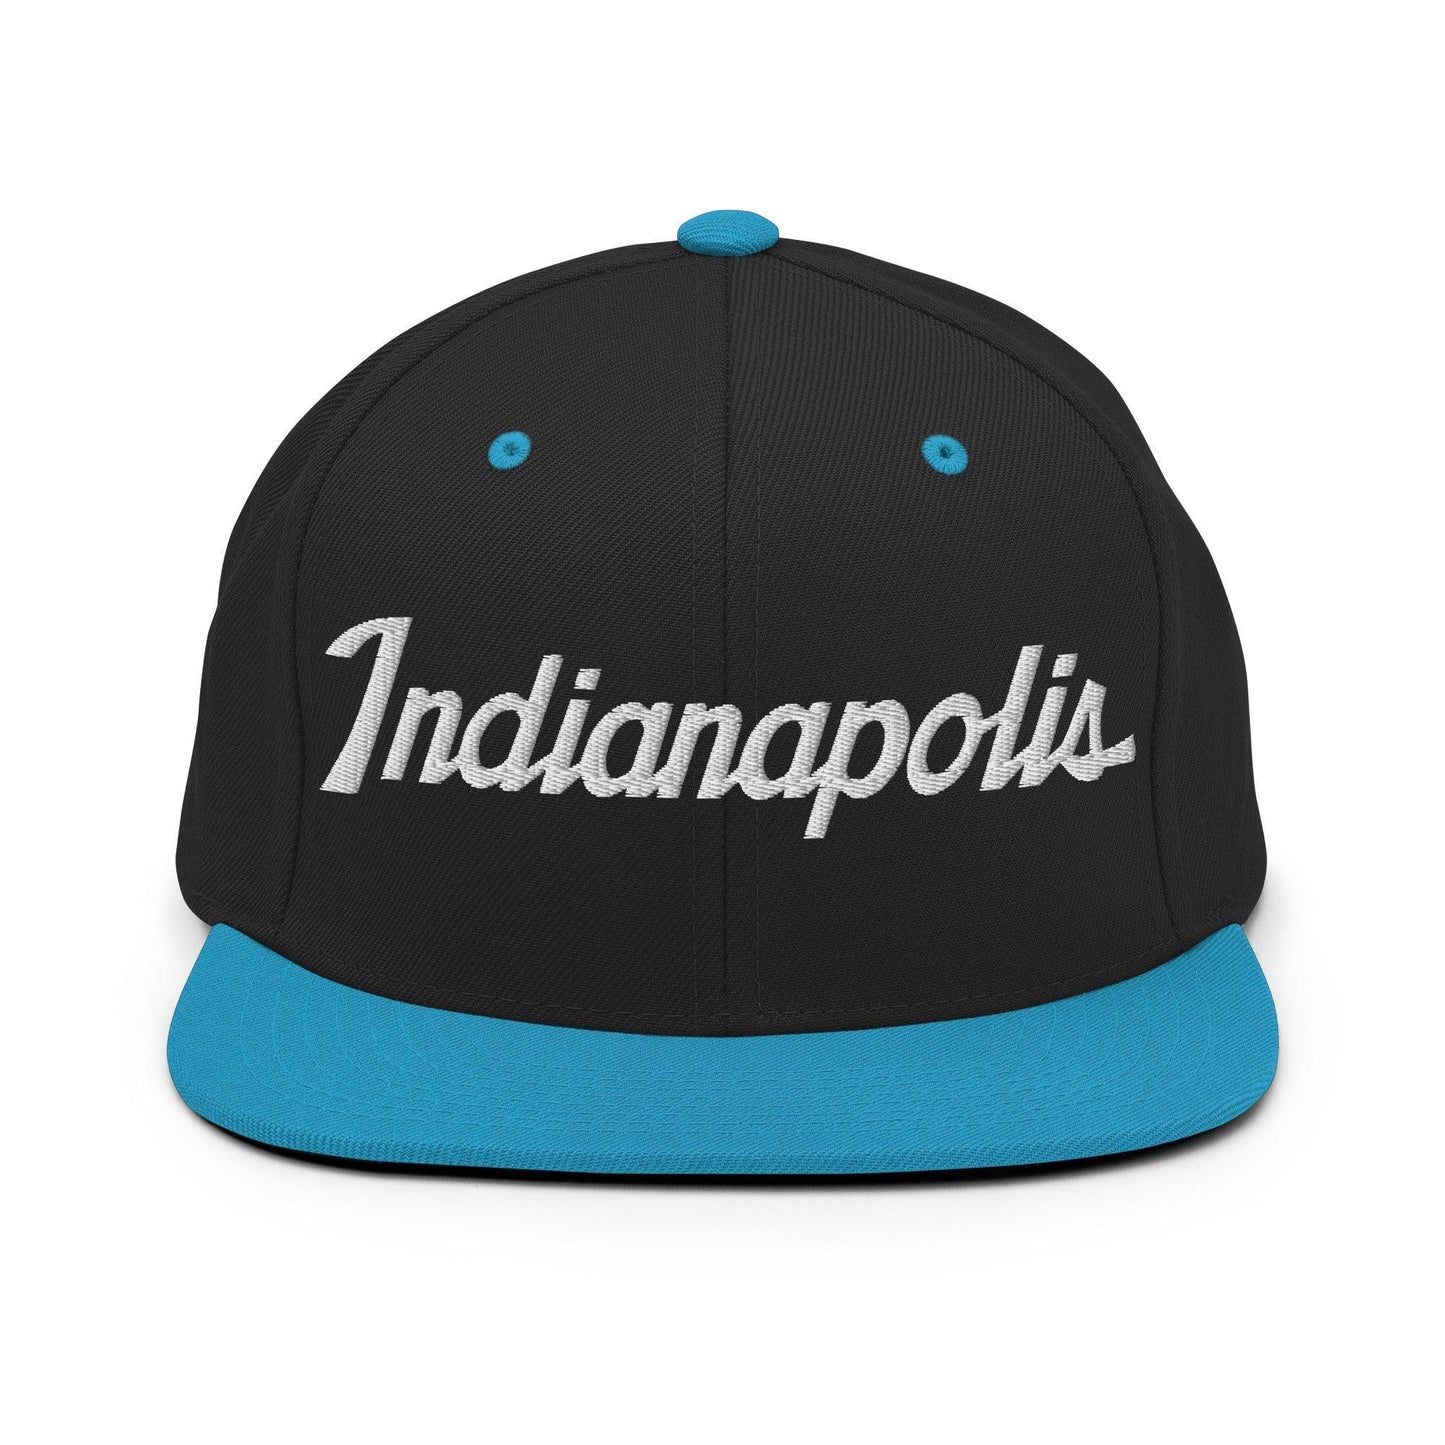 Indianapolis Script Snapback Hat Black Teal